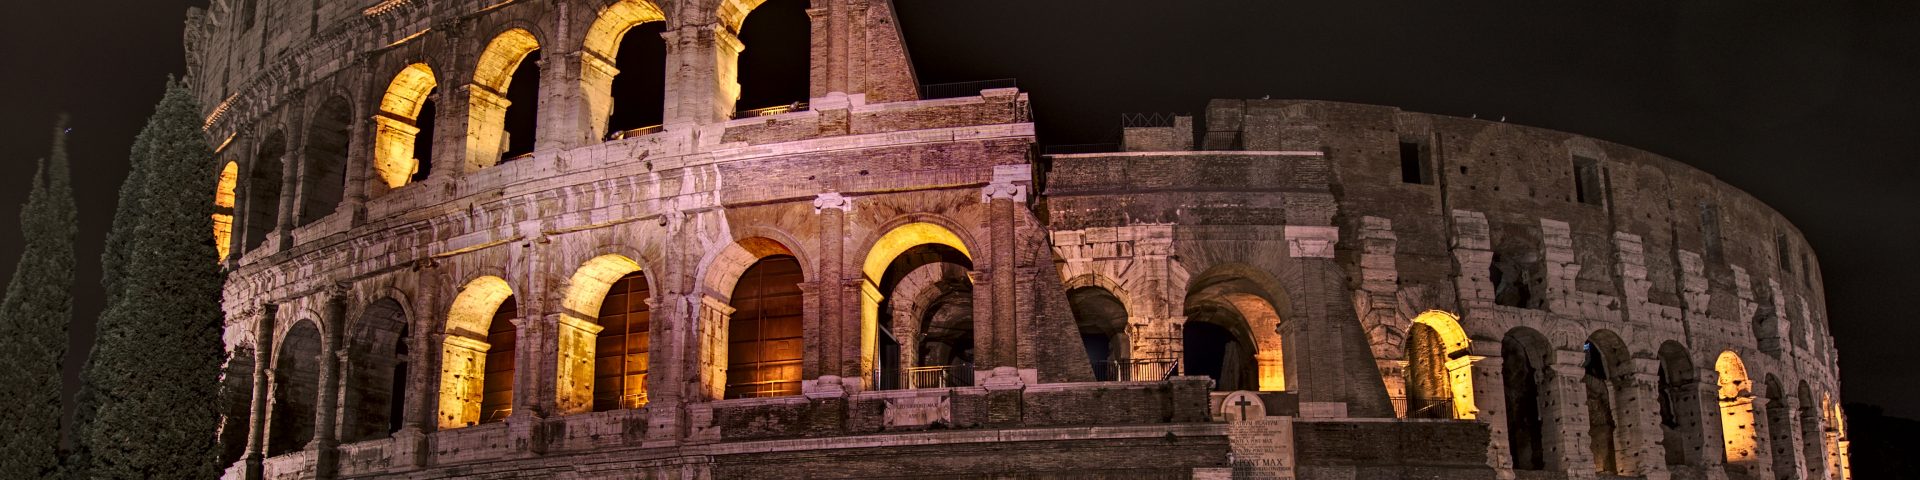 Kolosseum vor Sonneaufgang Rom kostenlos erleben